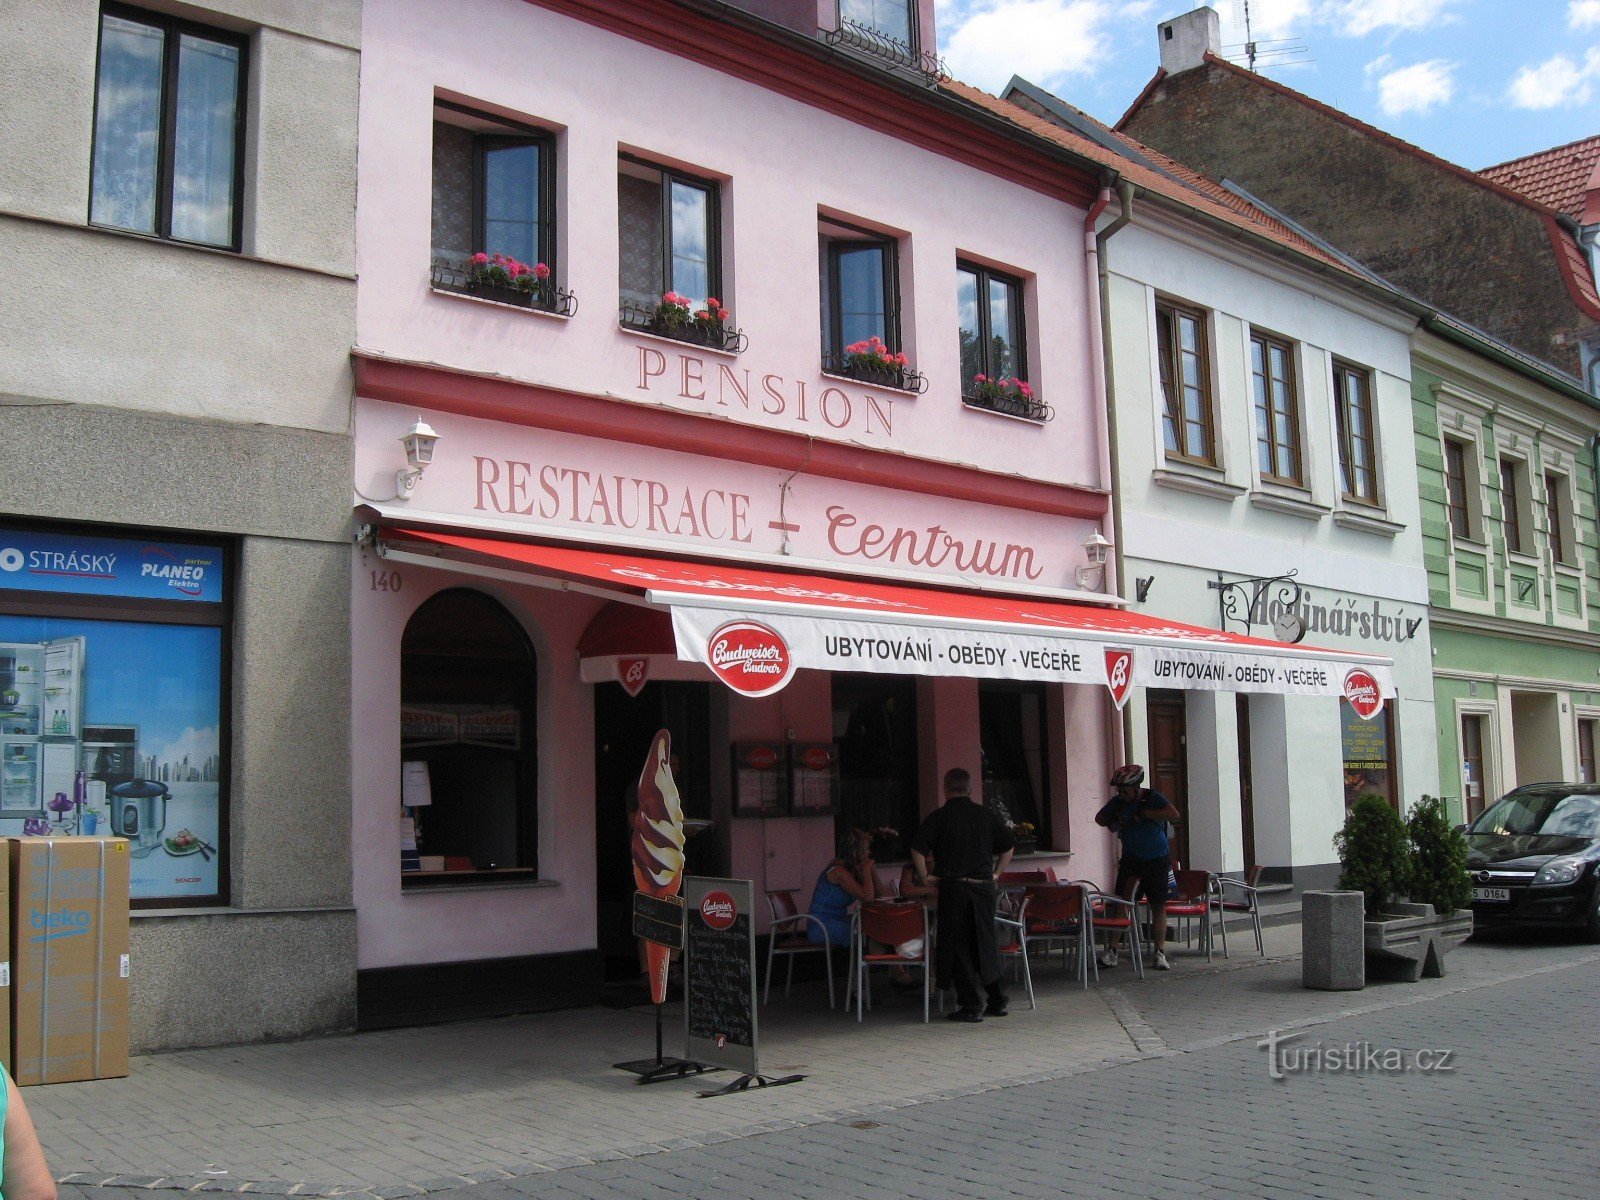 Trhové Sviny - Restaurant und Pension